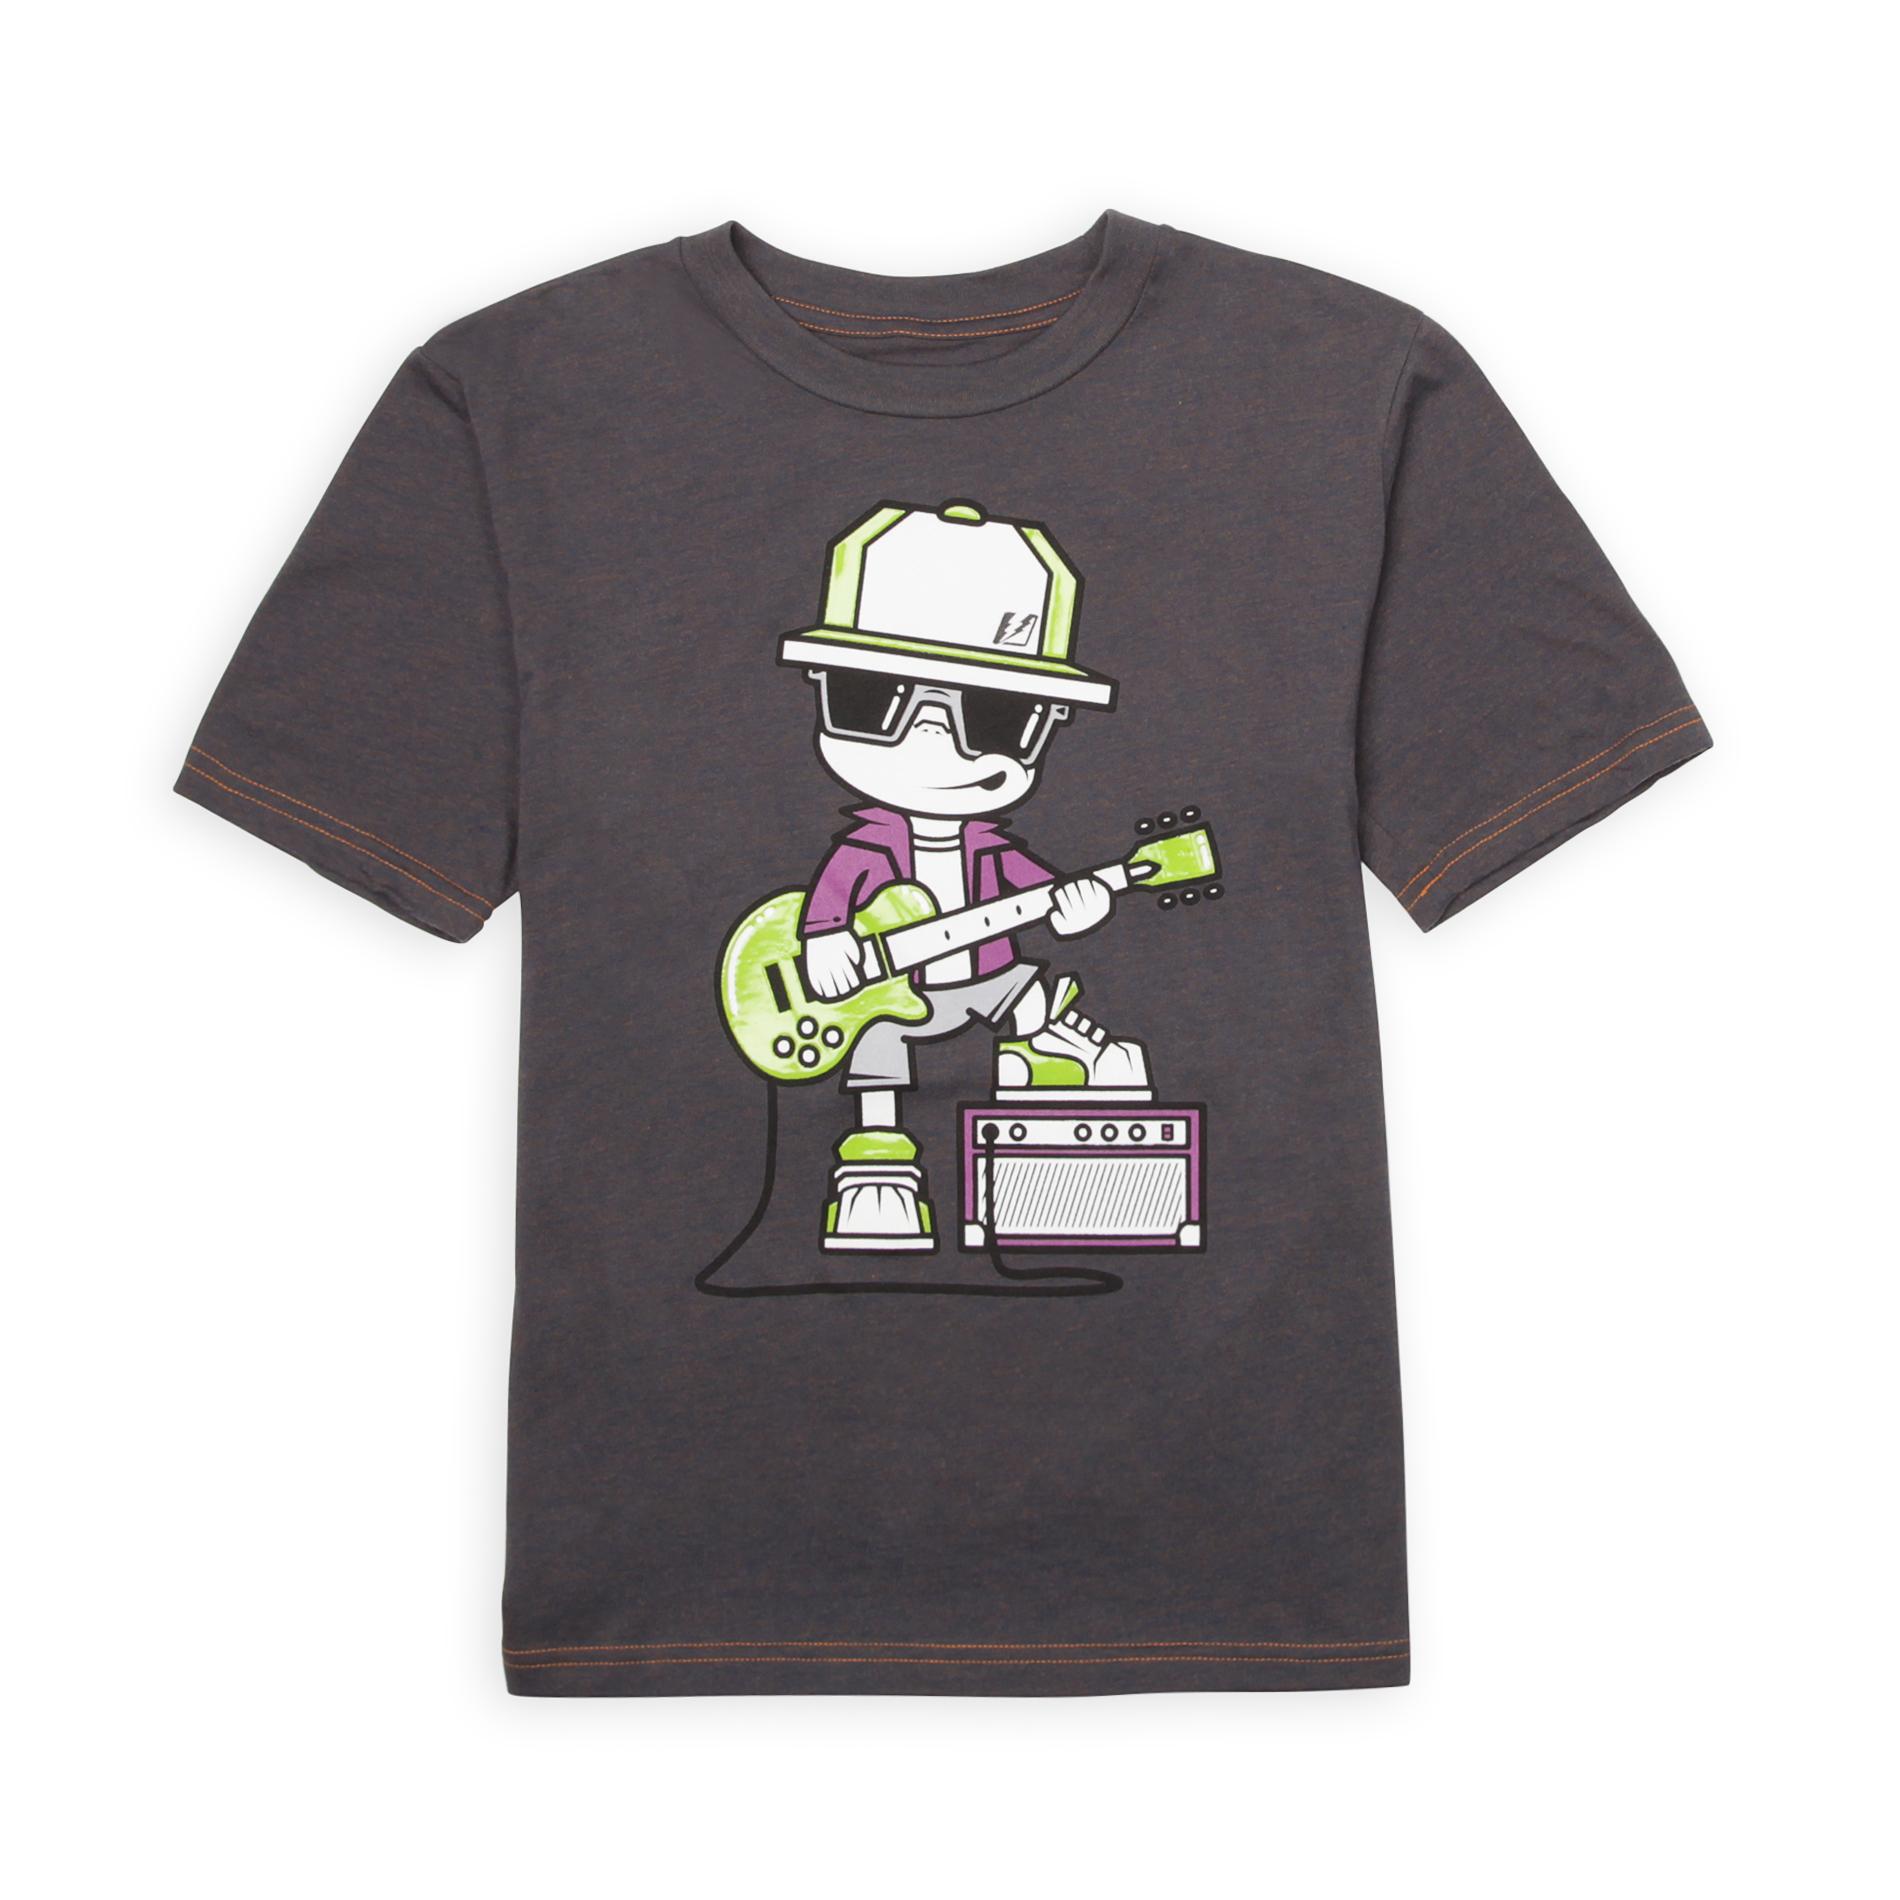 Amplify Boy's Graphic T-Shirt - Guitar